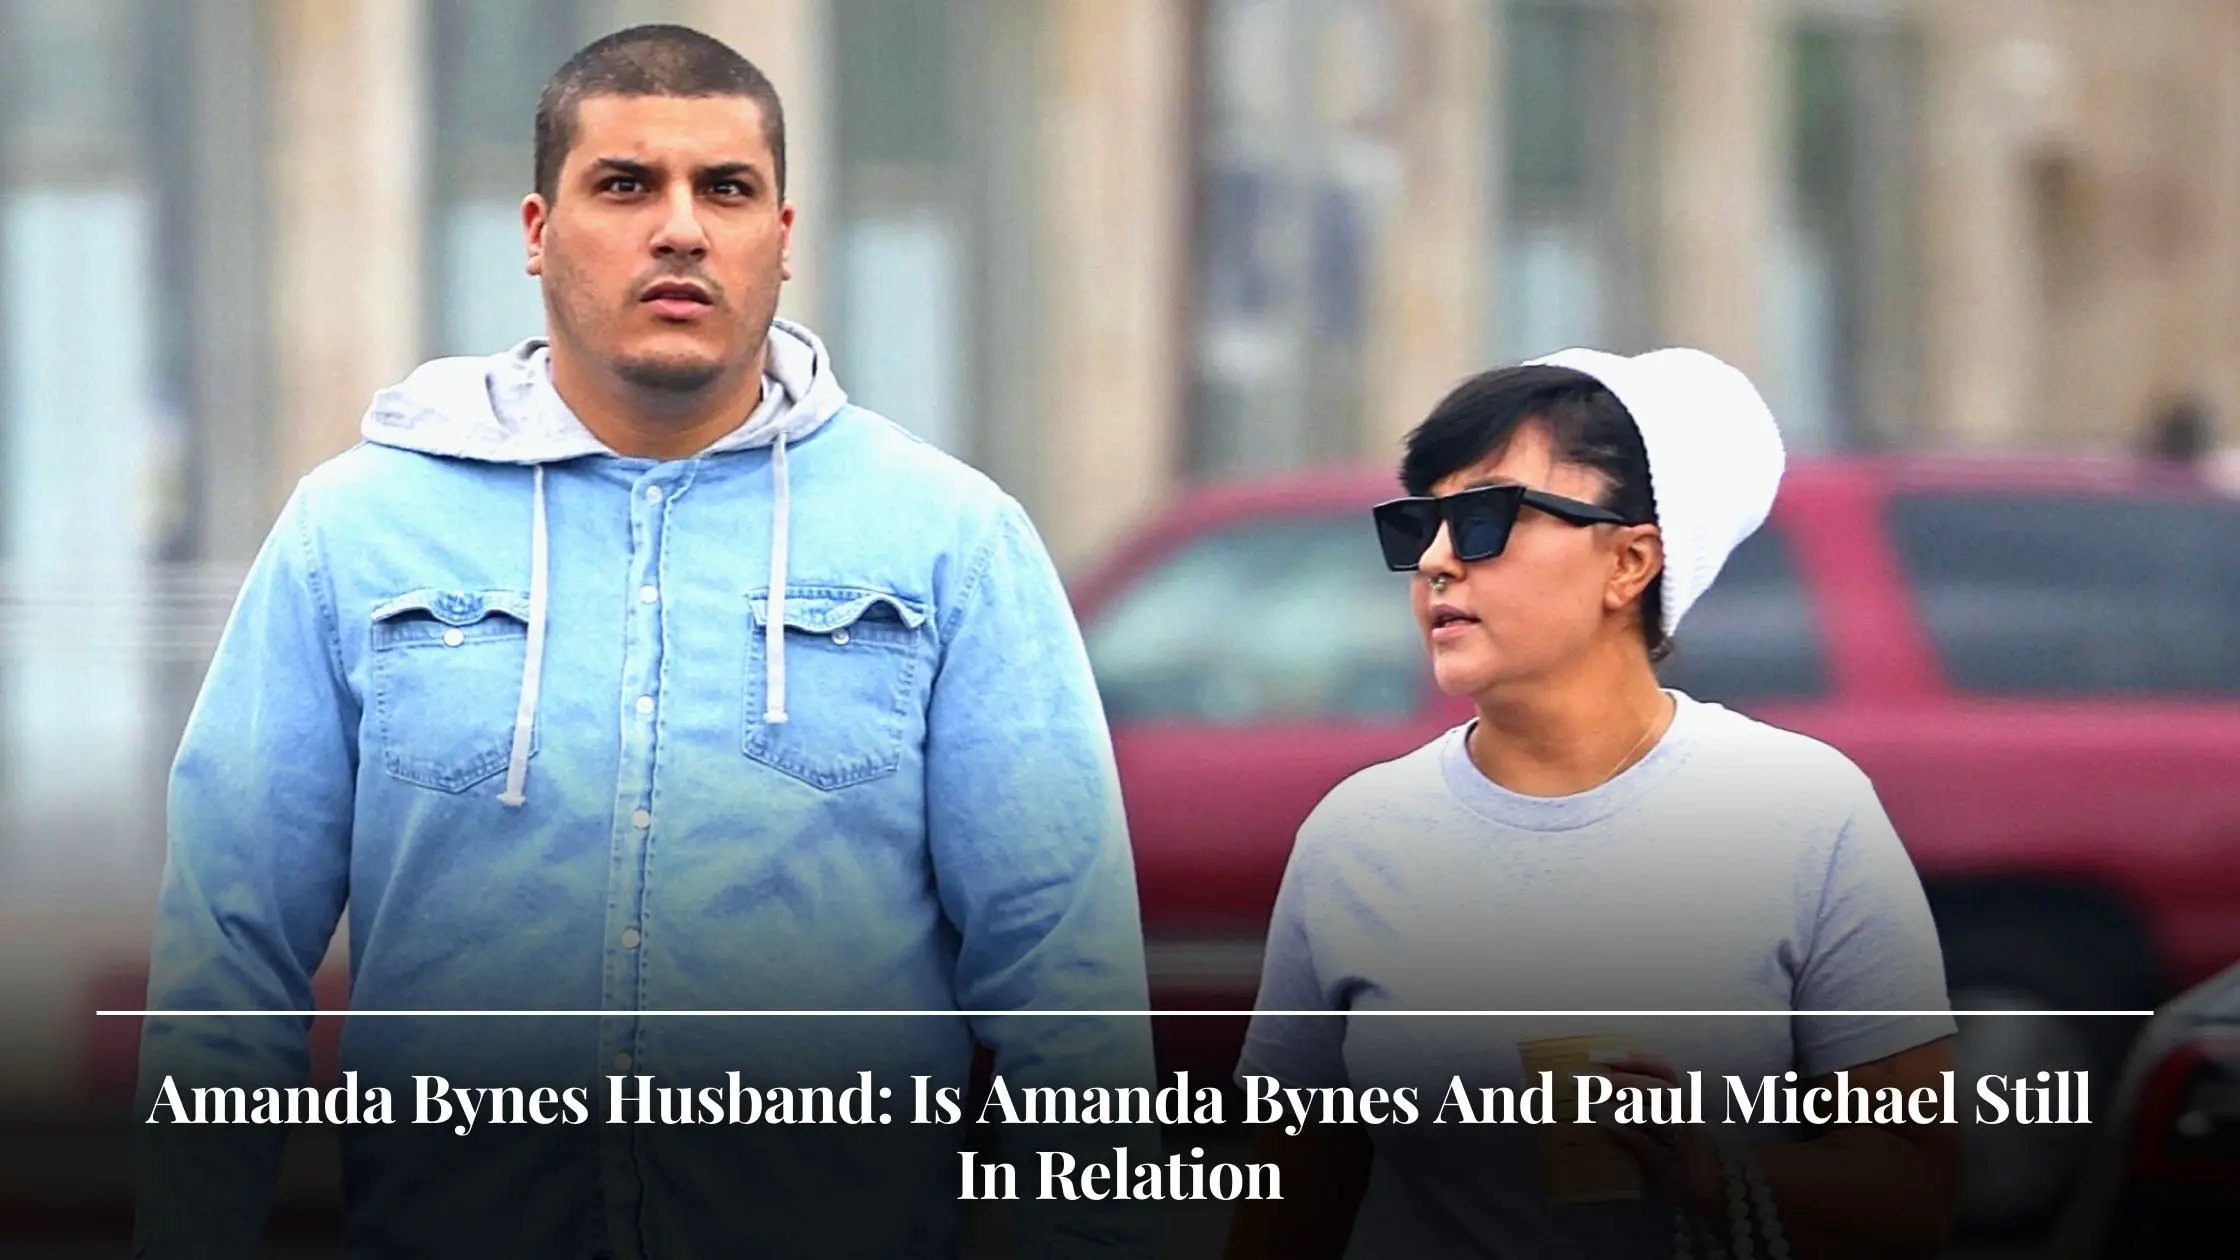 Amanda Bynes Husband Is Amanda Bynes And Paul Michael Still In Relation